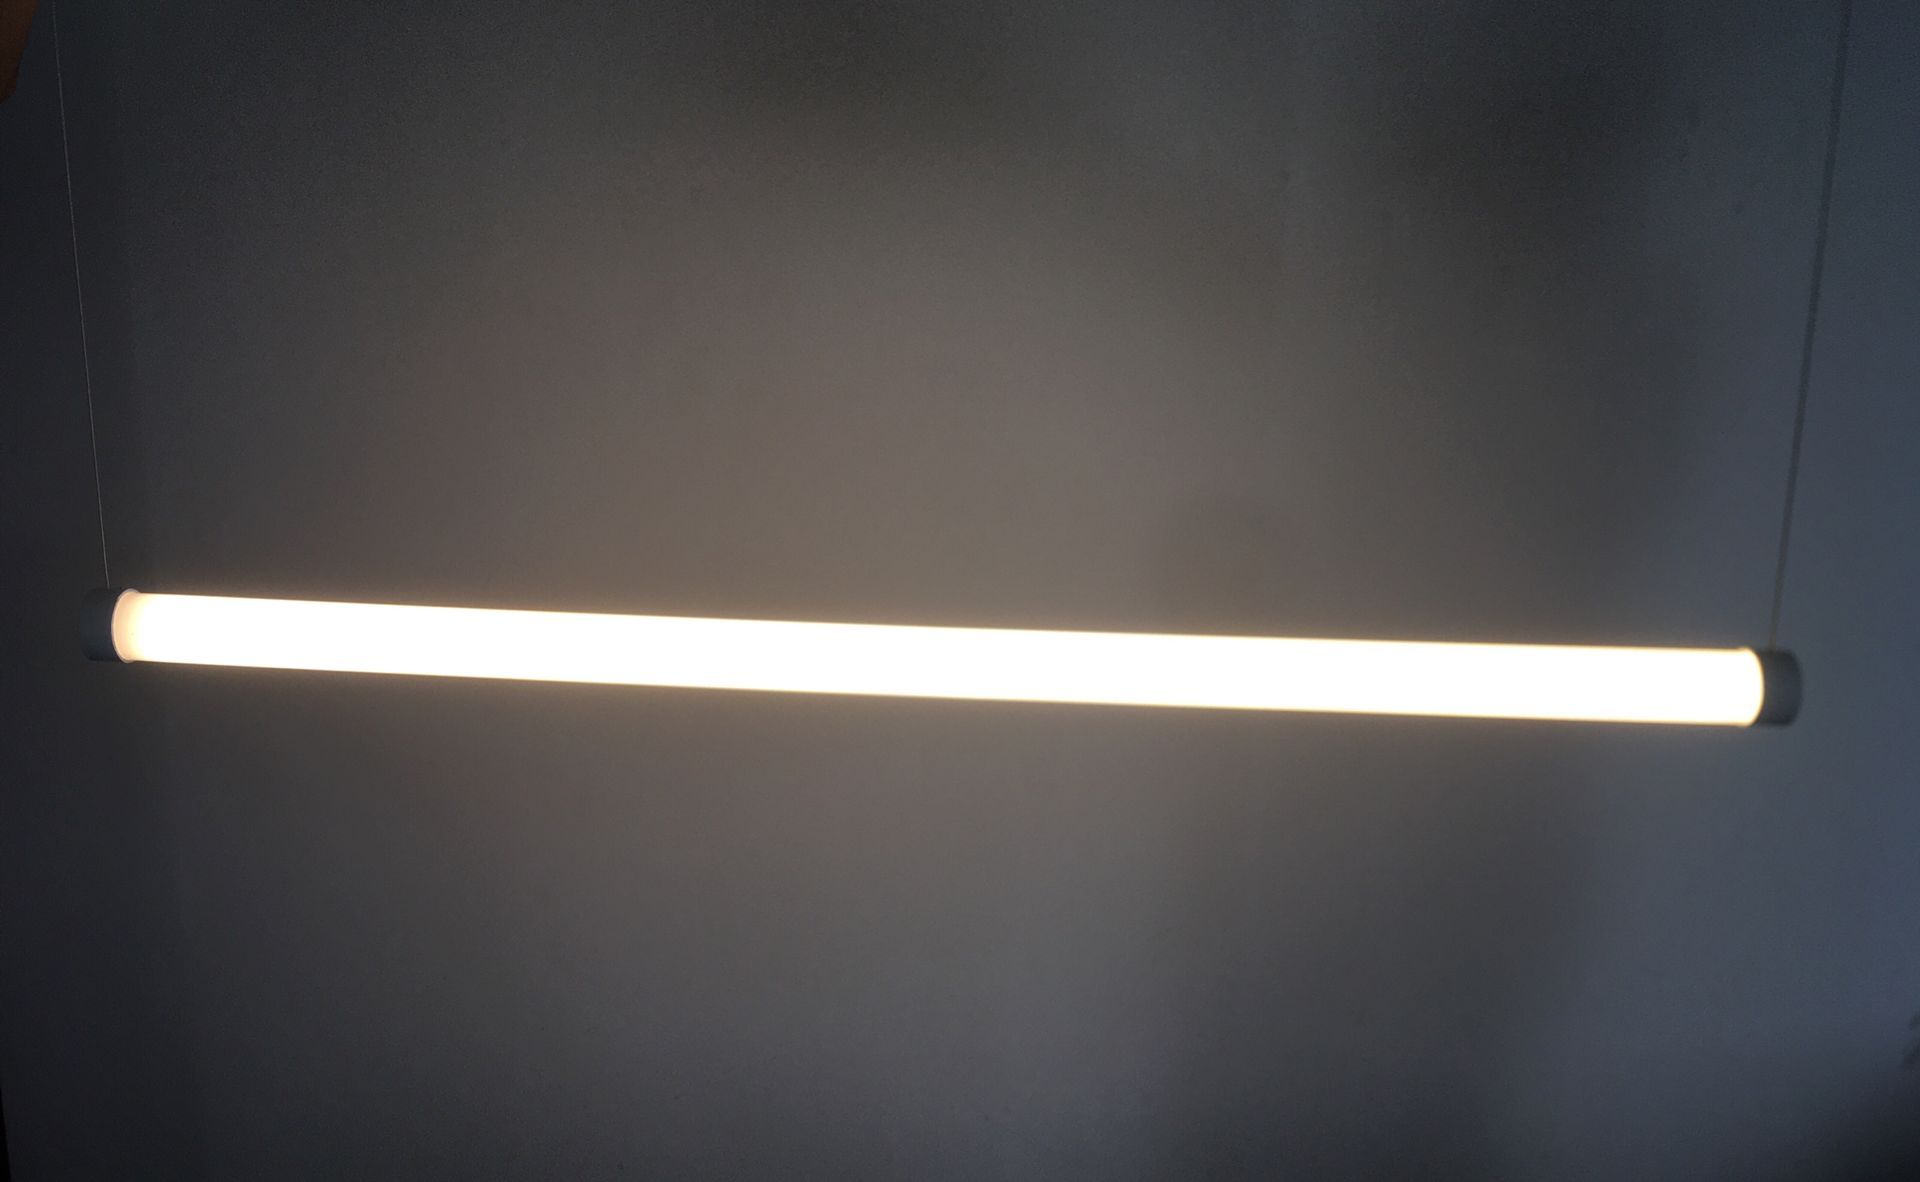 Led Tube Light series pendant decorative lighting fixture LL0178-HS-D30